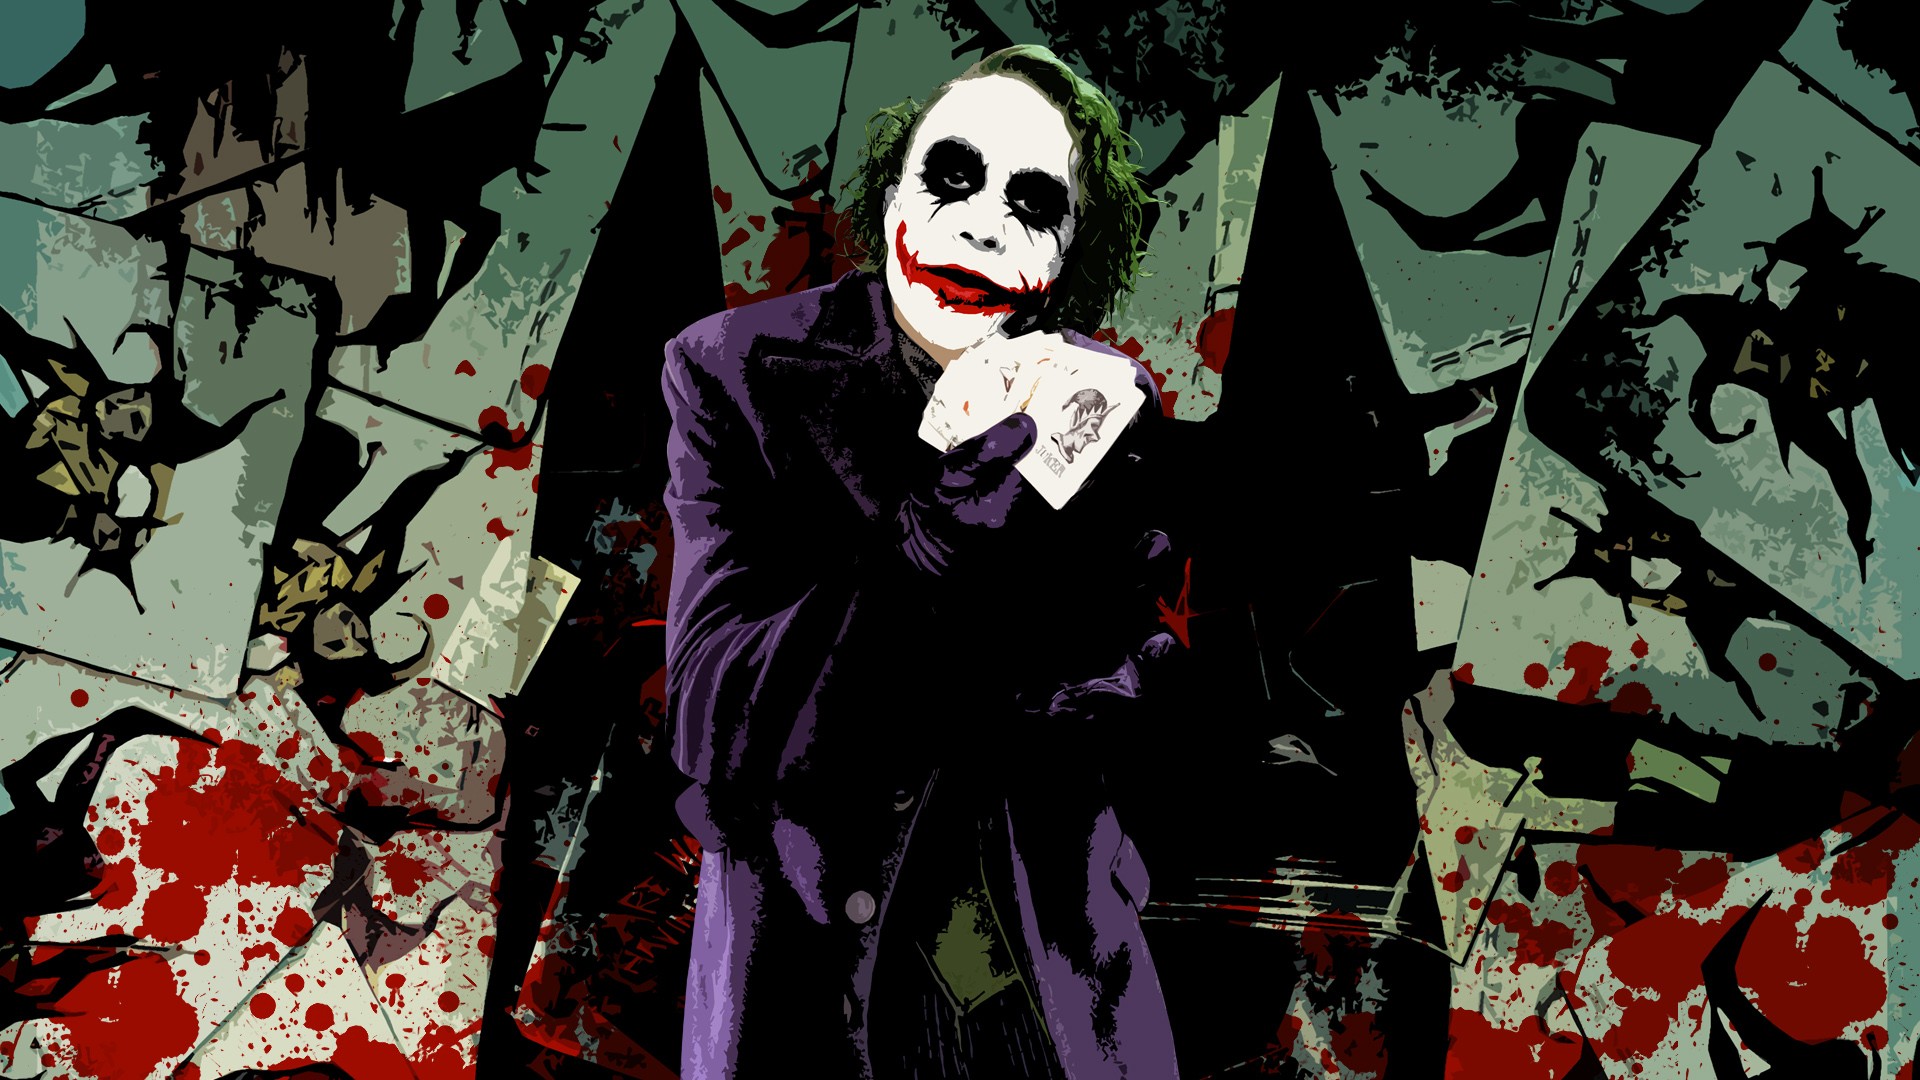 General 1920x1080 movies Batman The Dark Knight Joker MessenjahMatt cards paint splatter villains Heath Ledger deceased actor DC Comics Christopher Nolan